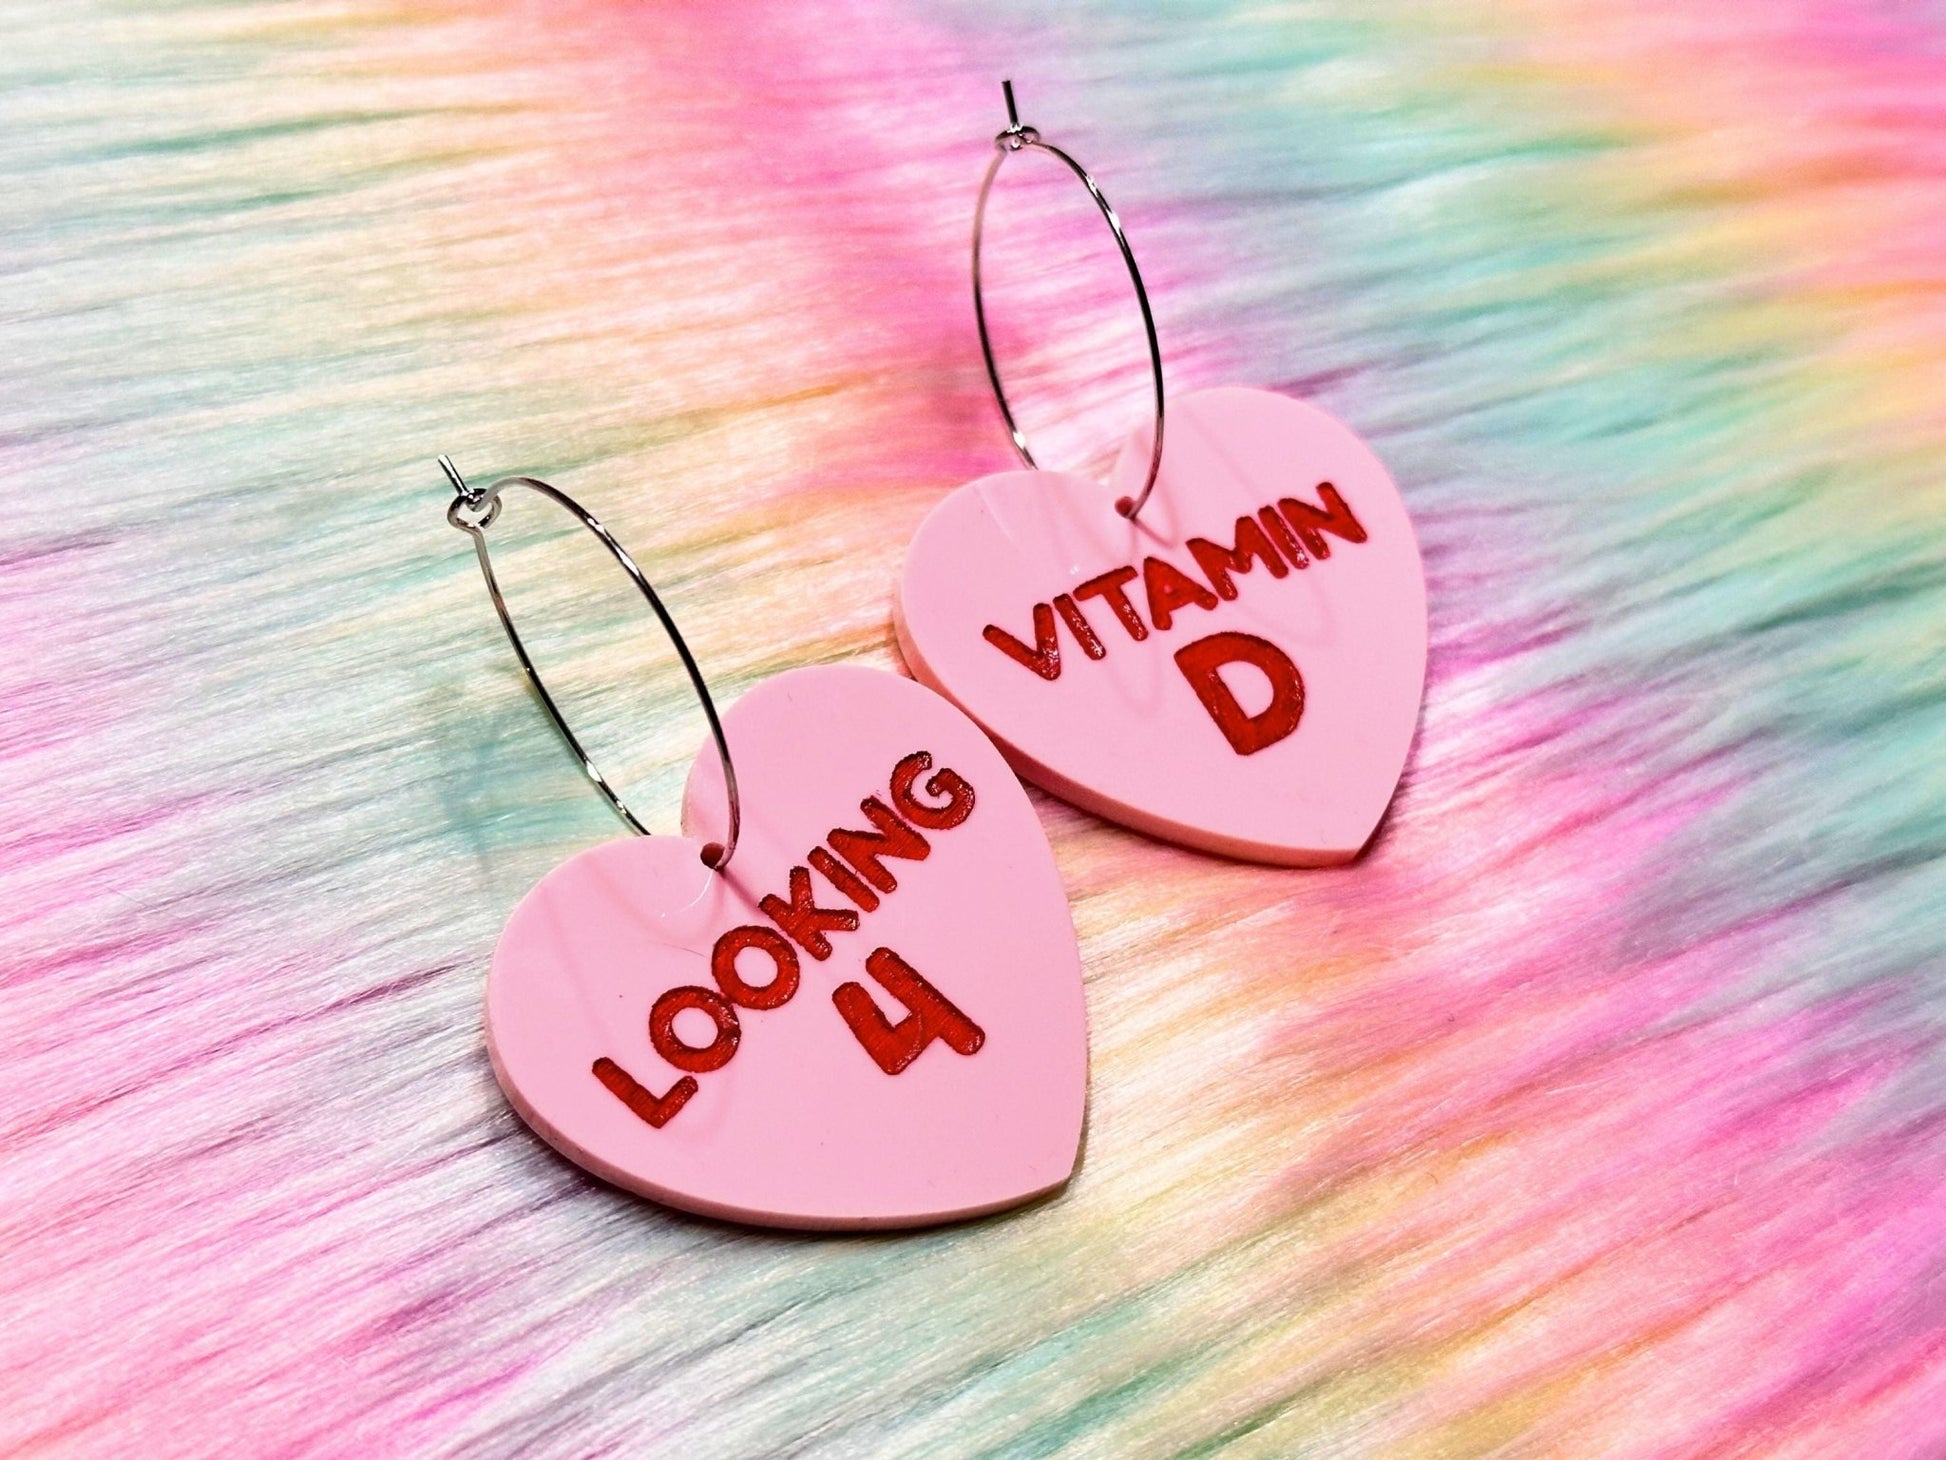 Naughty Heart Earrings - "Looking 4 Vitamin D" - Painted Raina